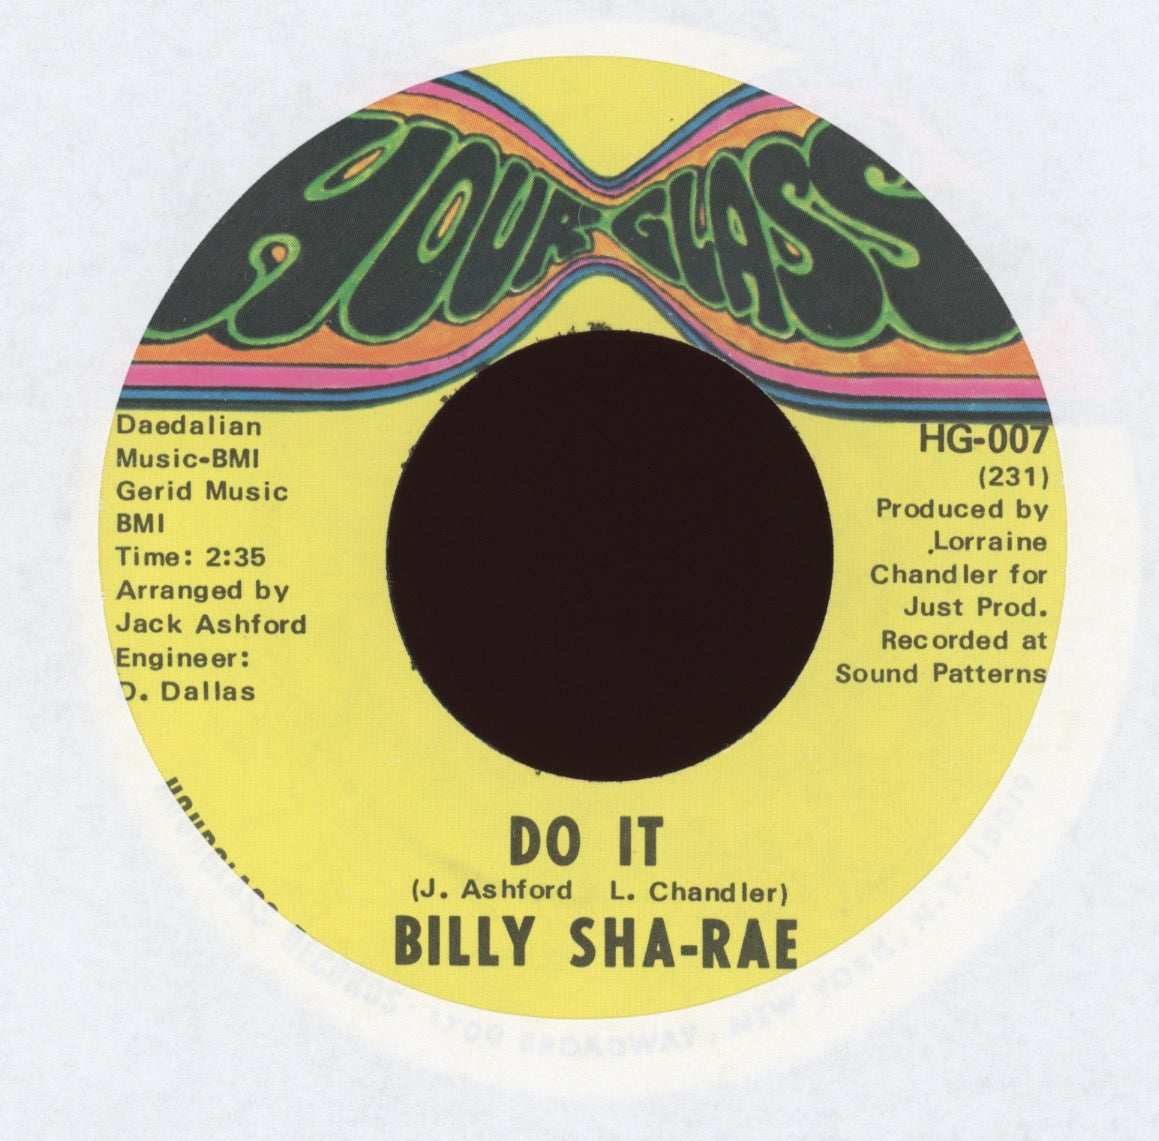 Billy Sha-Rae - Do It on Hourglass